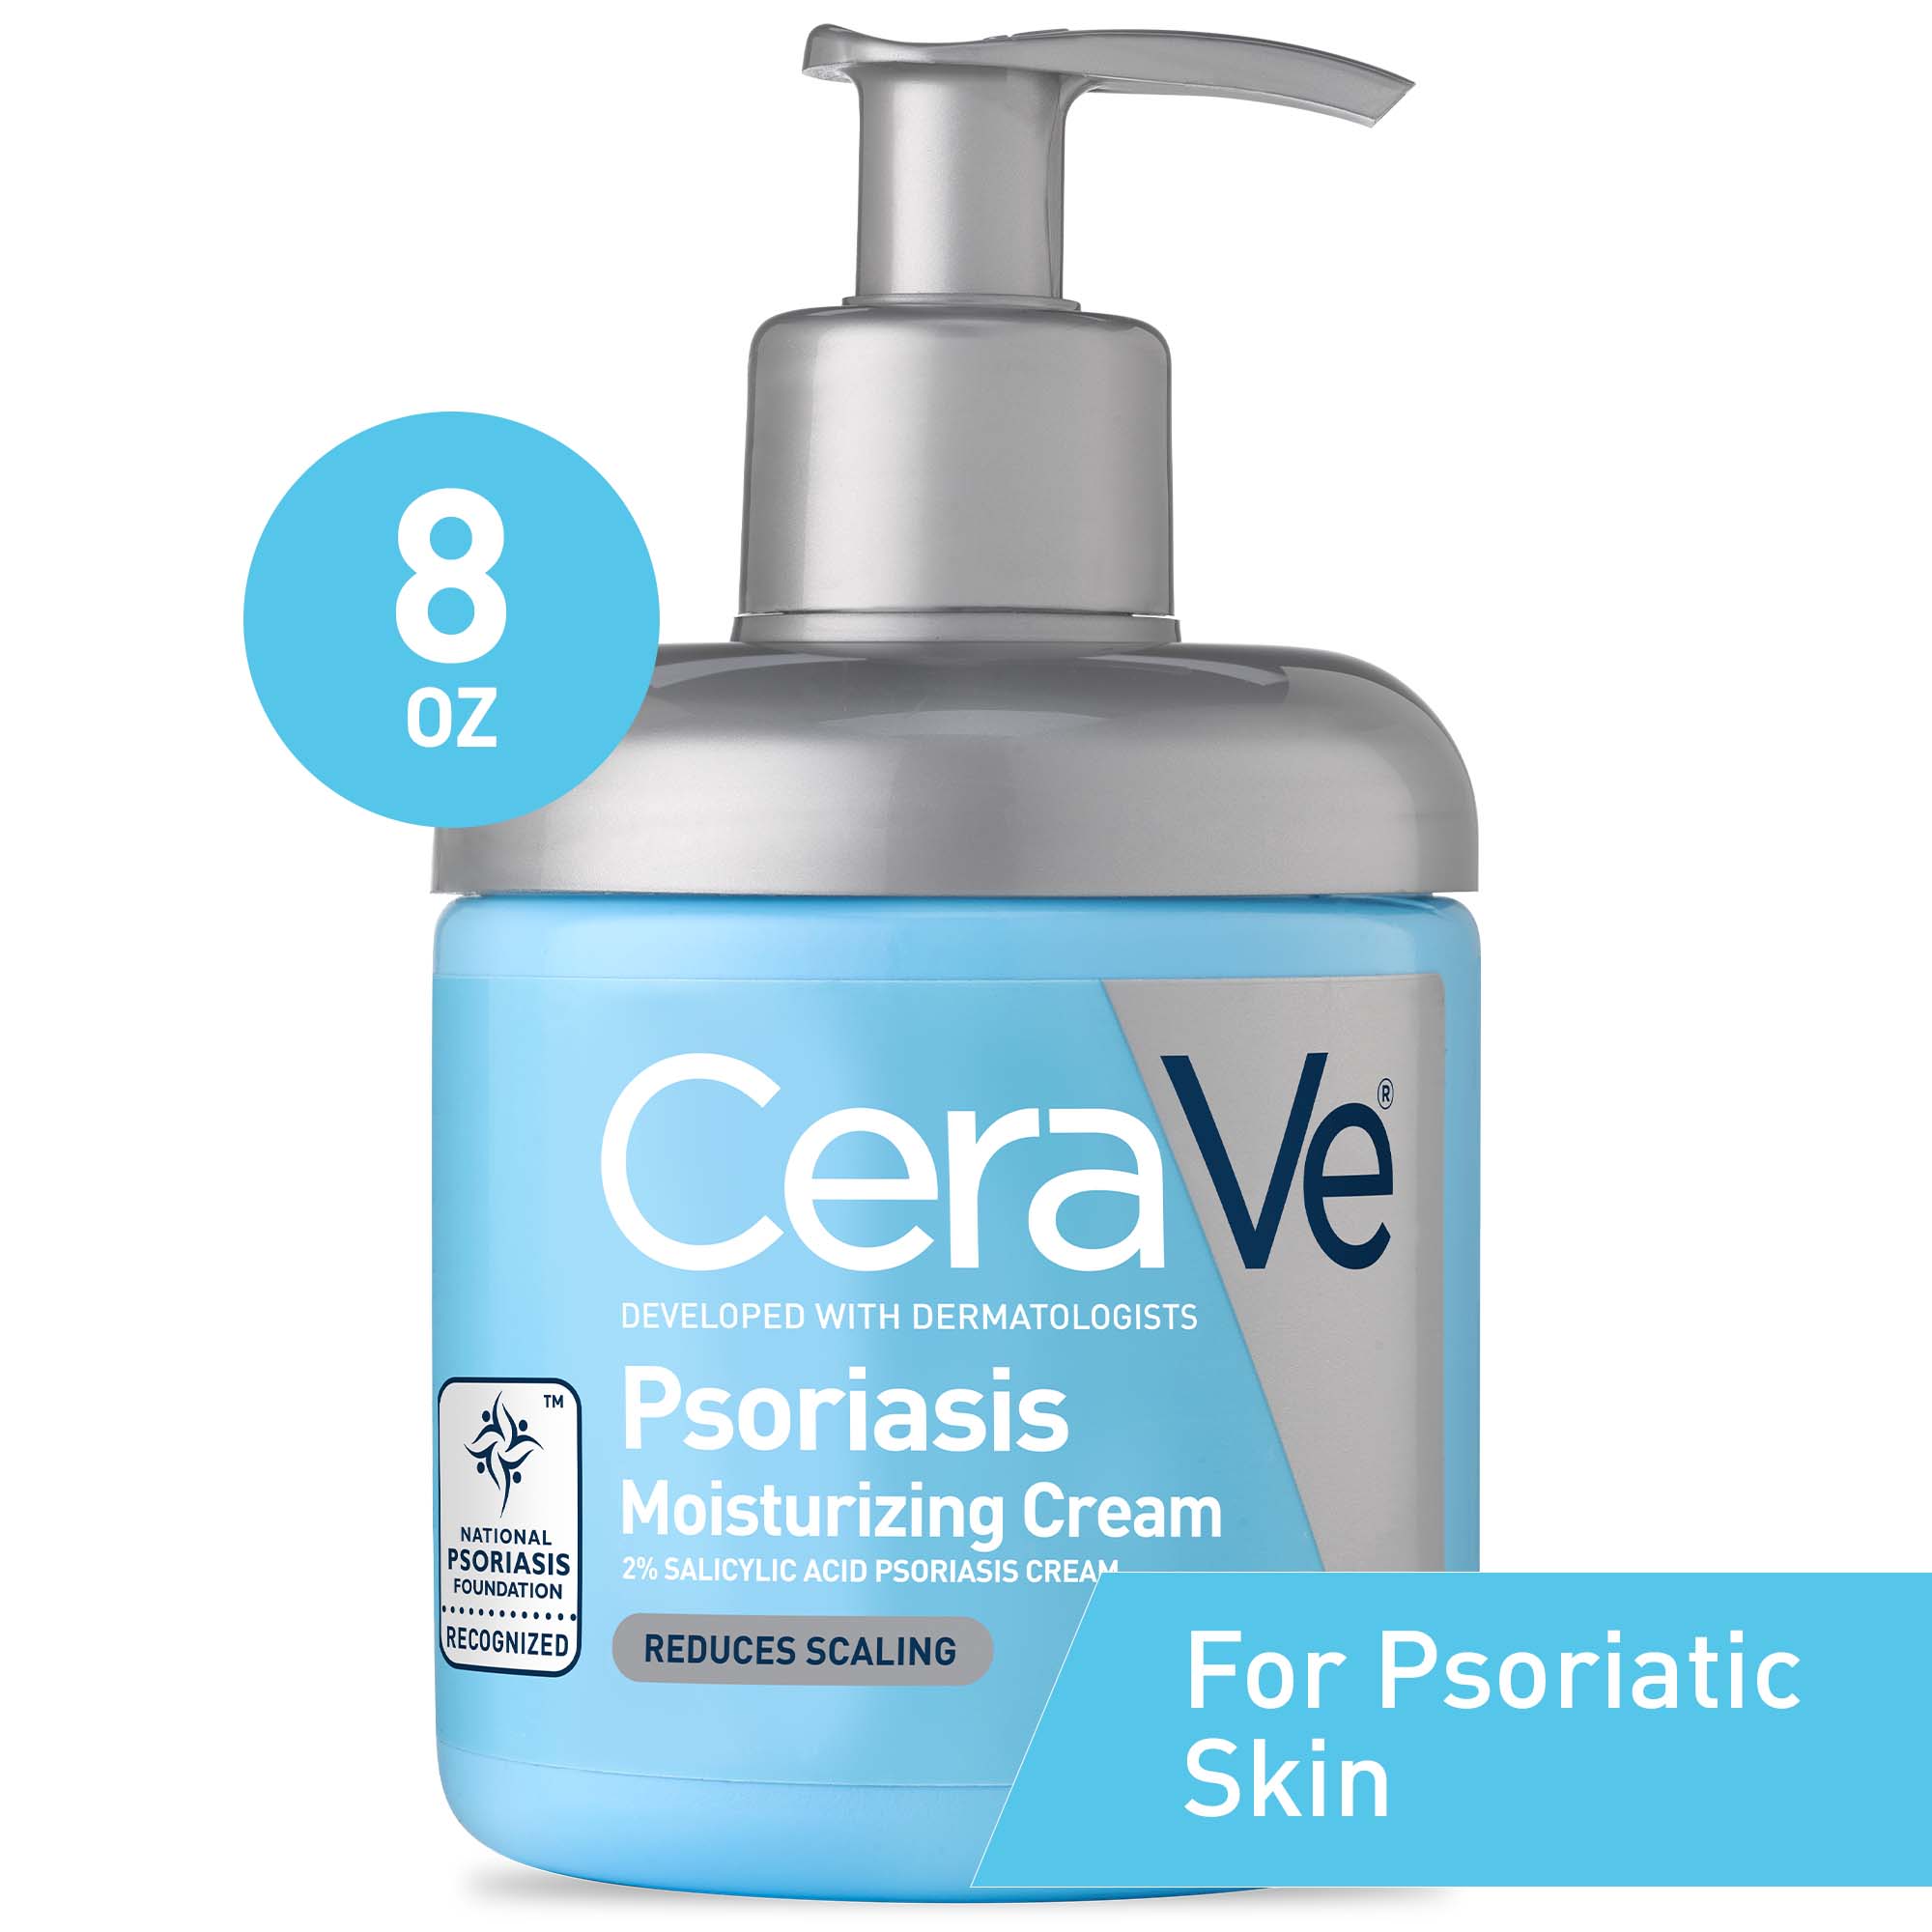 CeraVe Psoriasis Moisturizing Cream & Body Lotion with Salicylic Acid & Urea for Psoriatic & Dry Skin, 8 oz - image 1 of 13